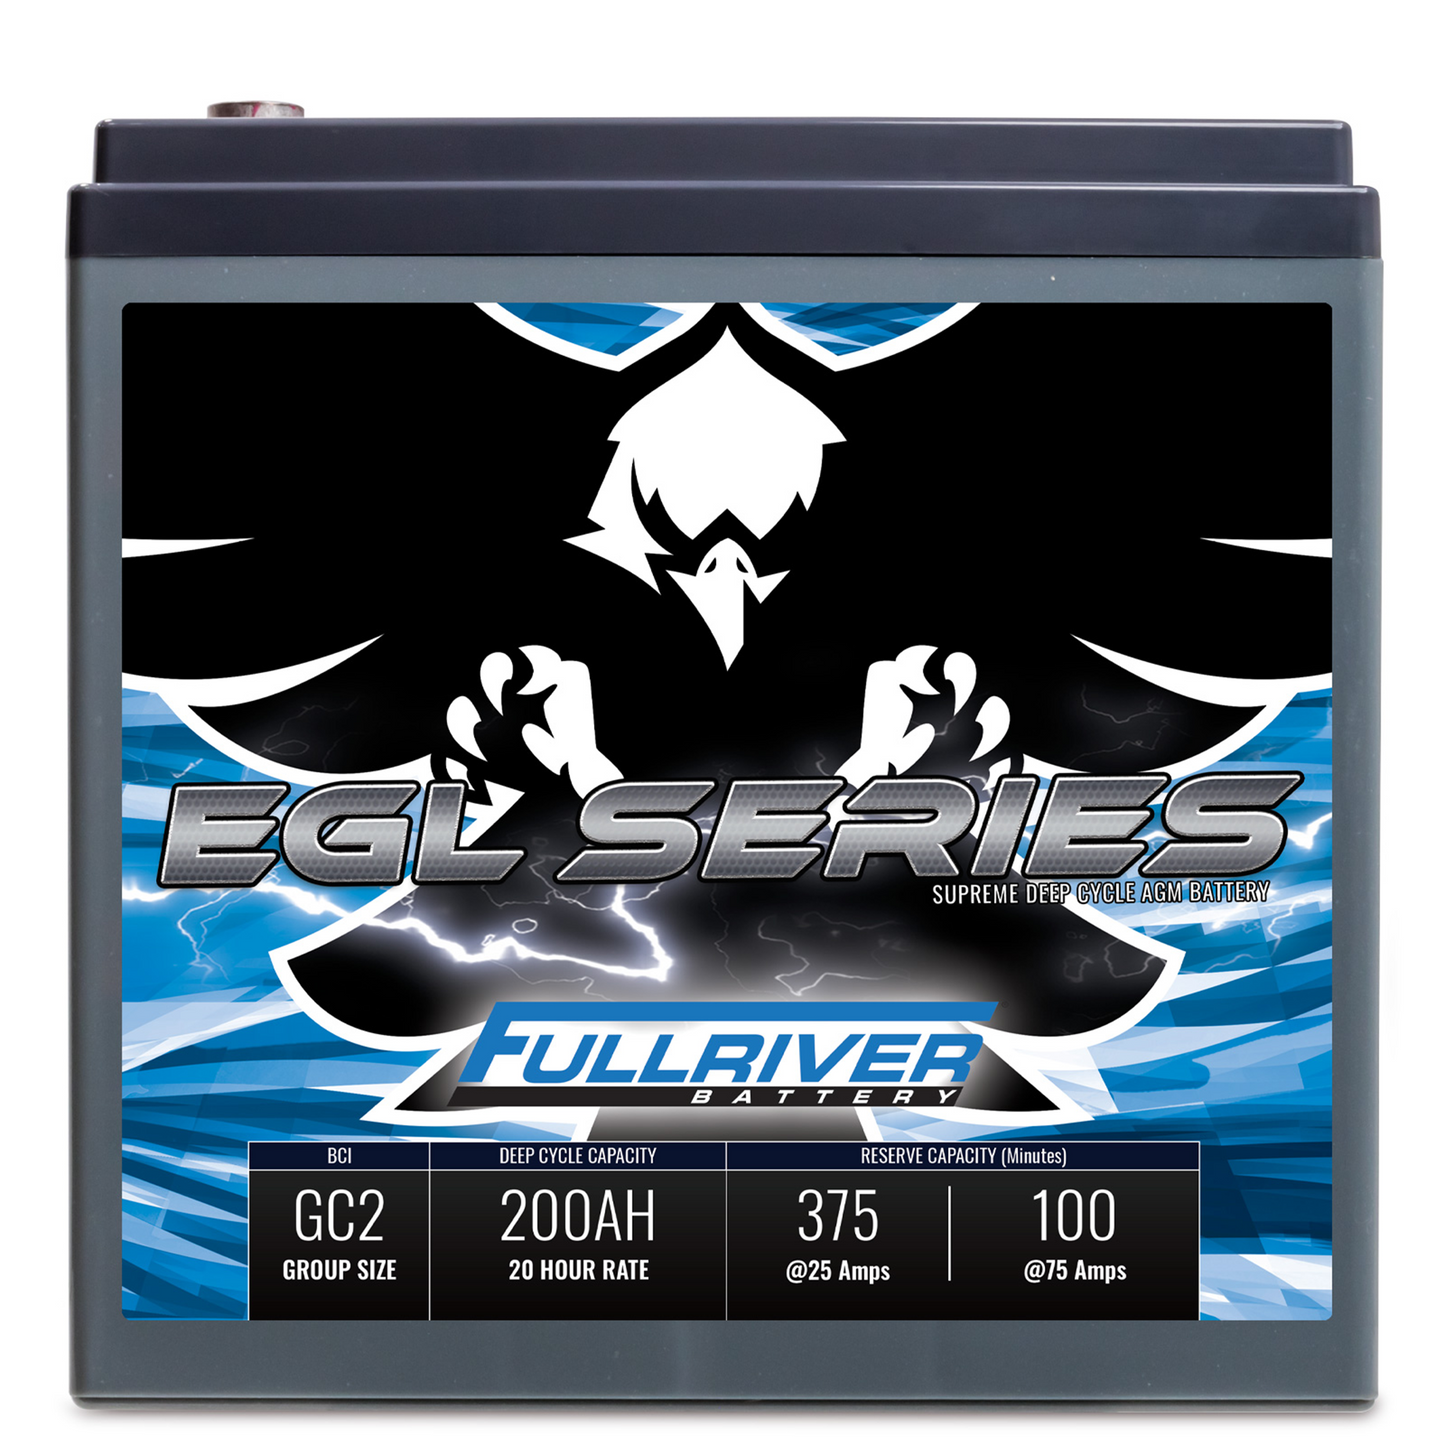 EGL200-6 Supreme Deep Cycle Battery